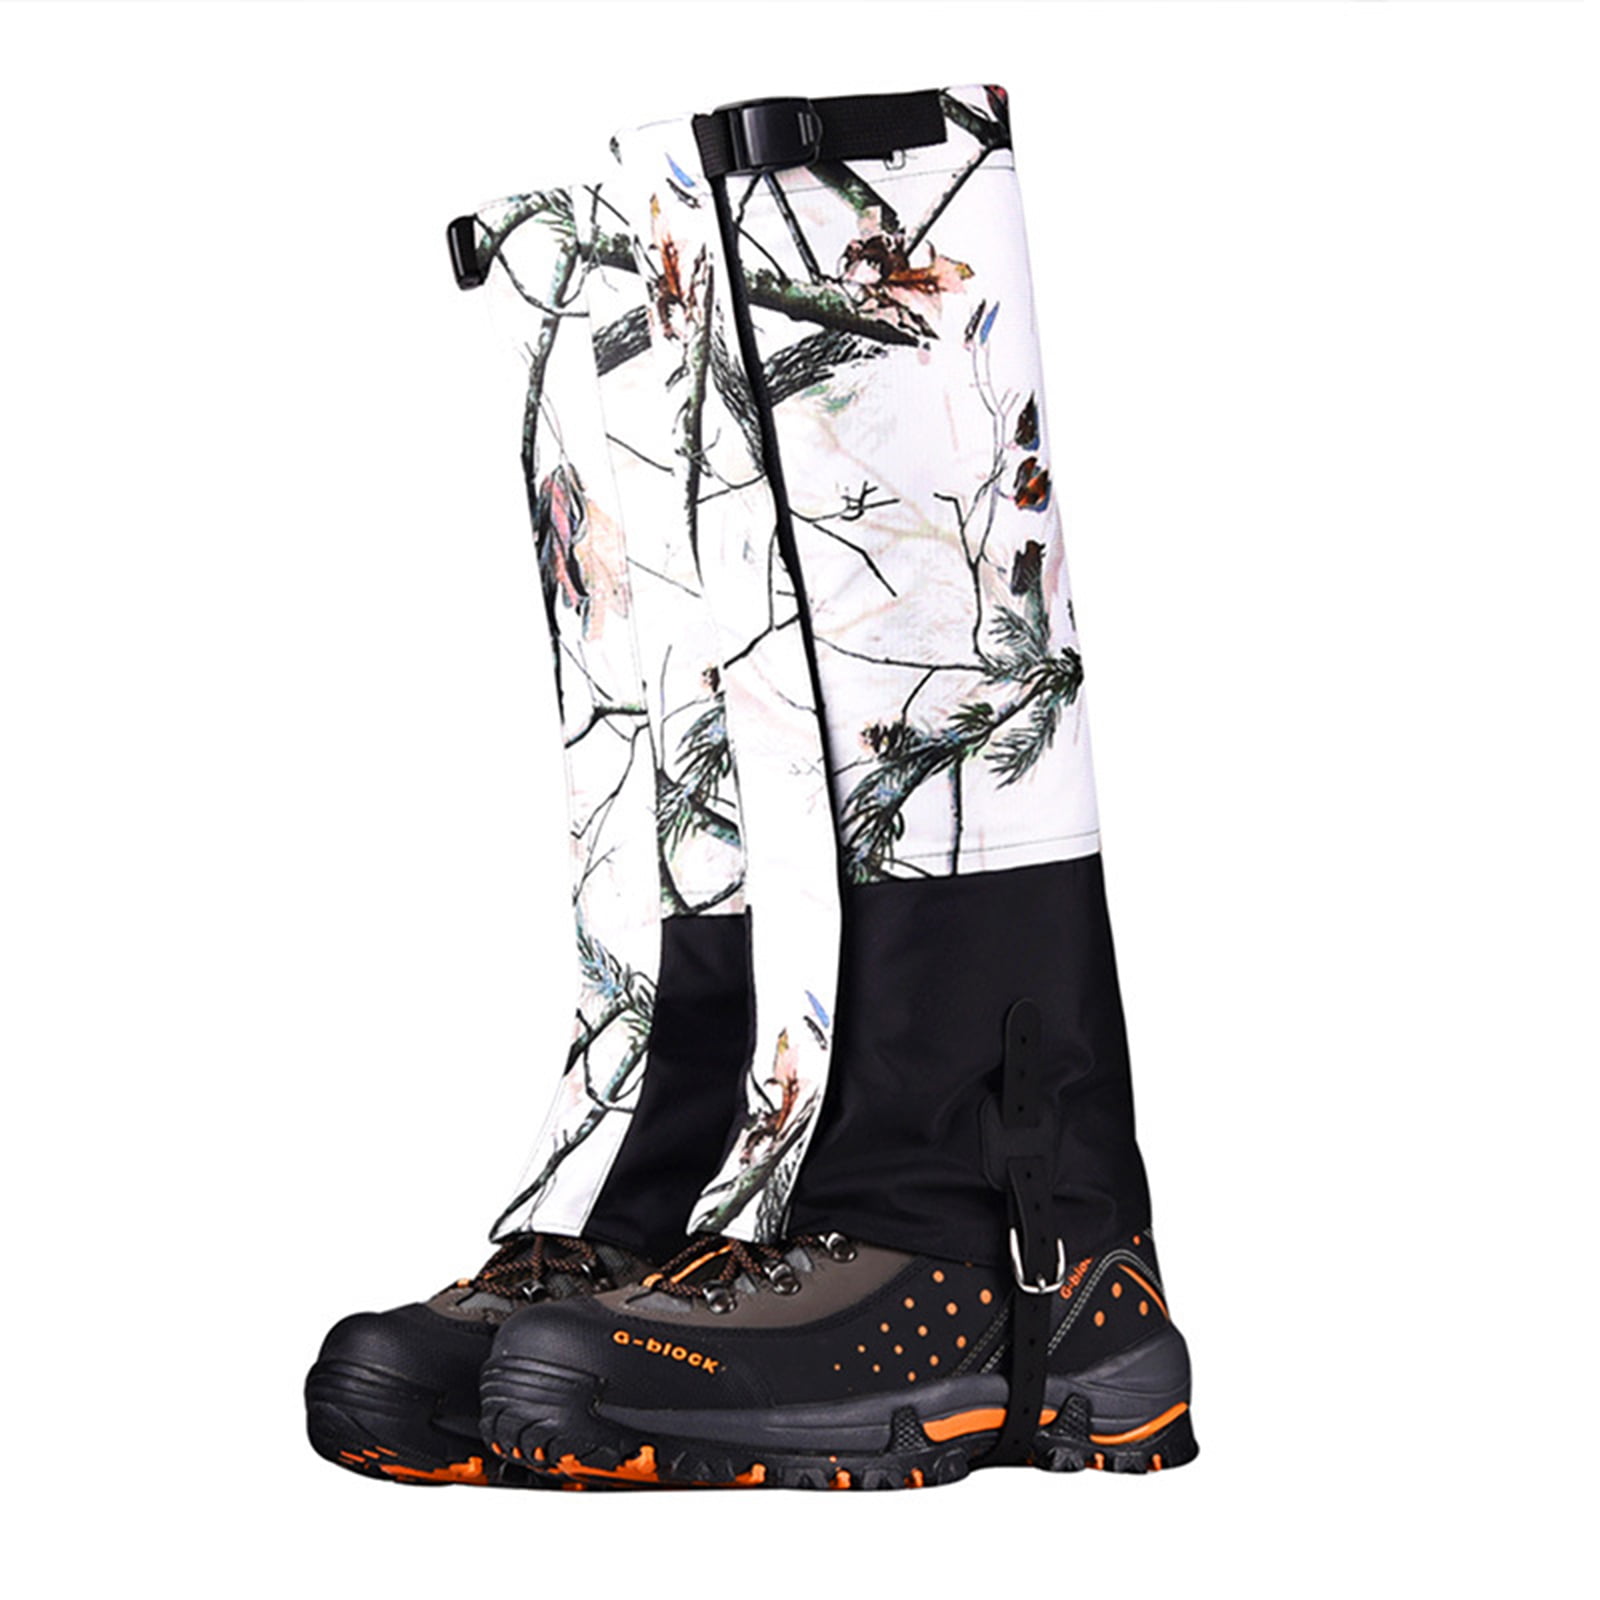 Camo Waterproof Climbin Hiking Snow Ski Shoe Leg Cover Boot Legging Gamaschen F3 